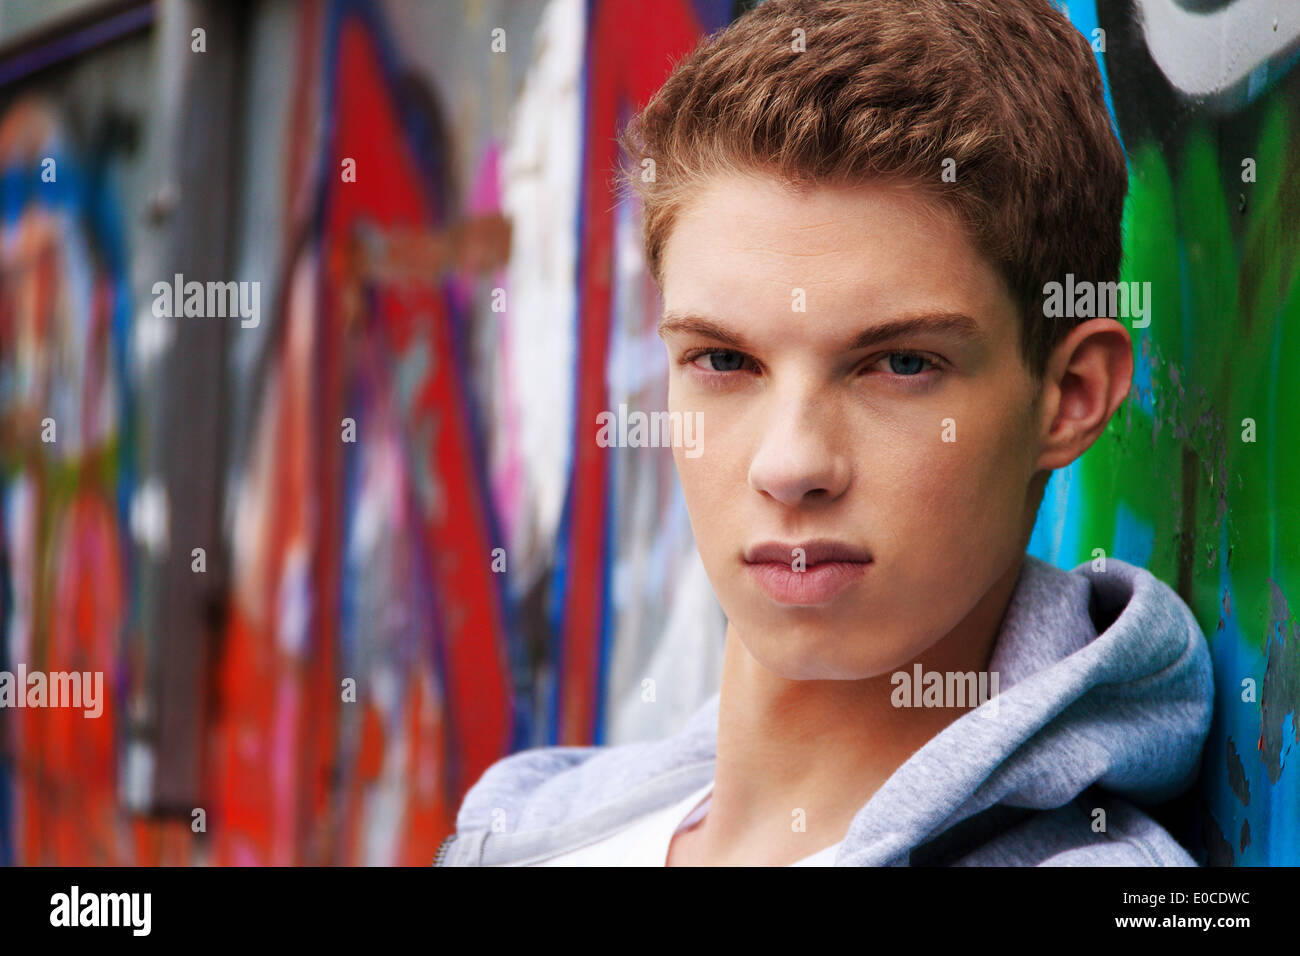 A cool looking youthful man infront of graffiti, Ein cool blickender Jugendlicher Mann vor Graffiti Stock Photo